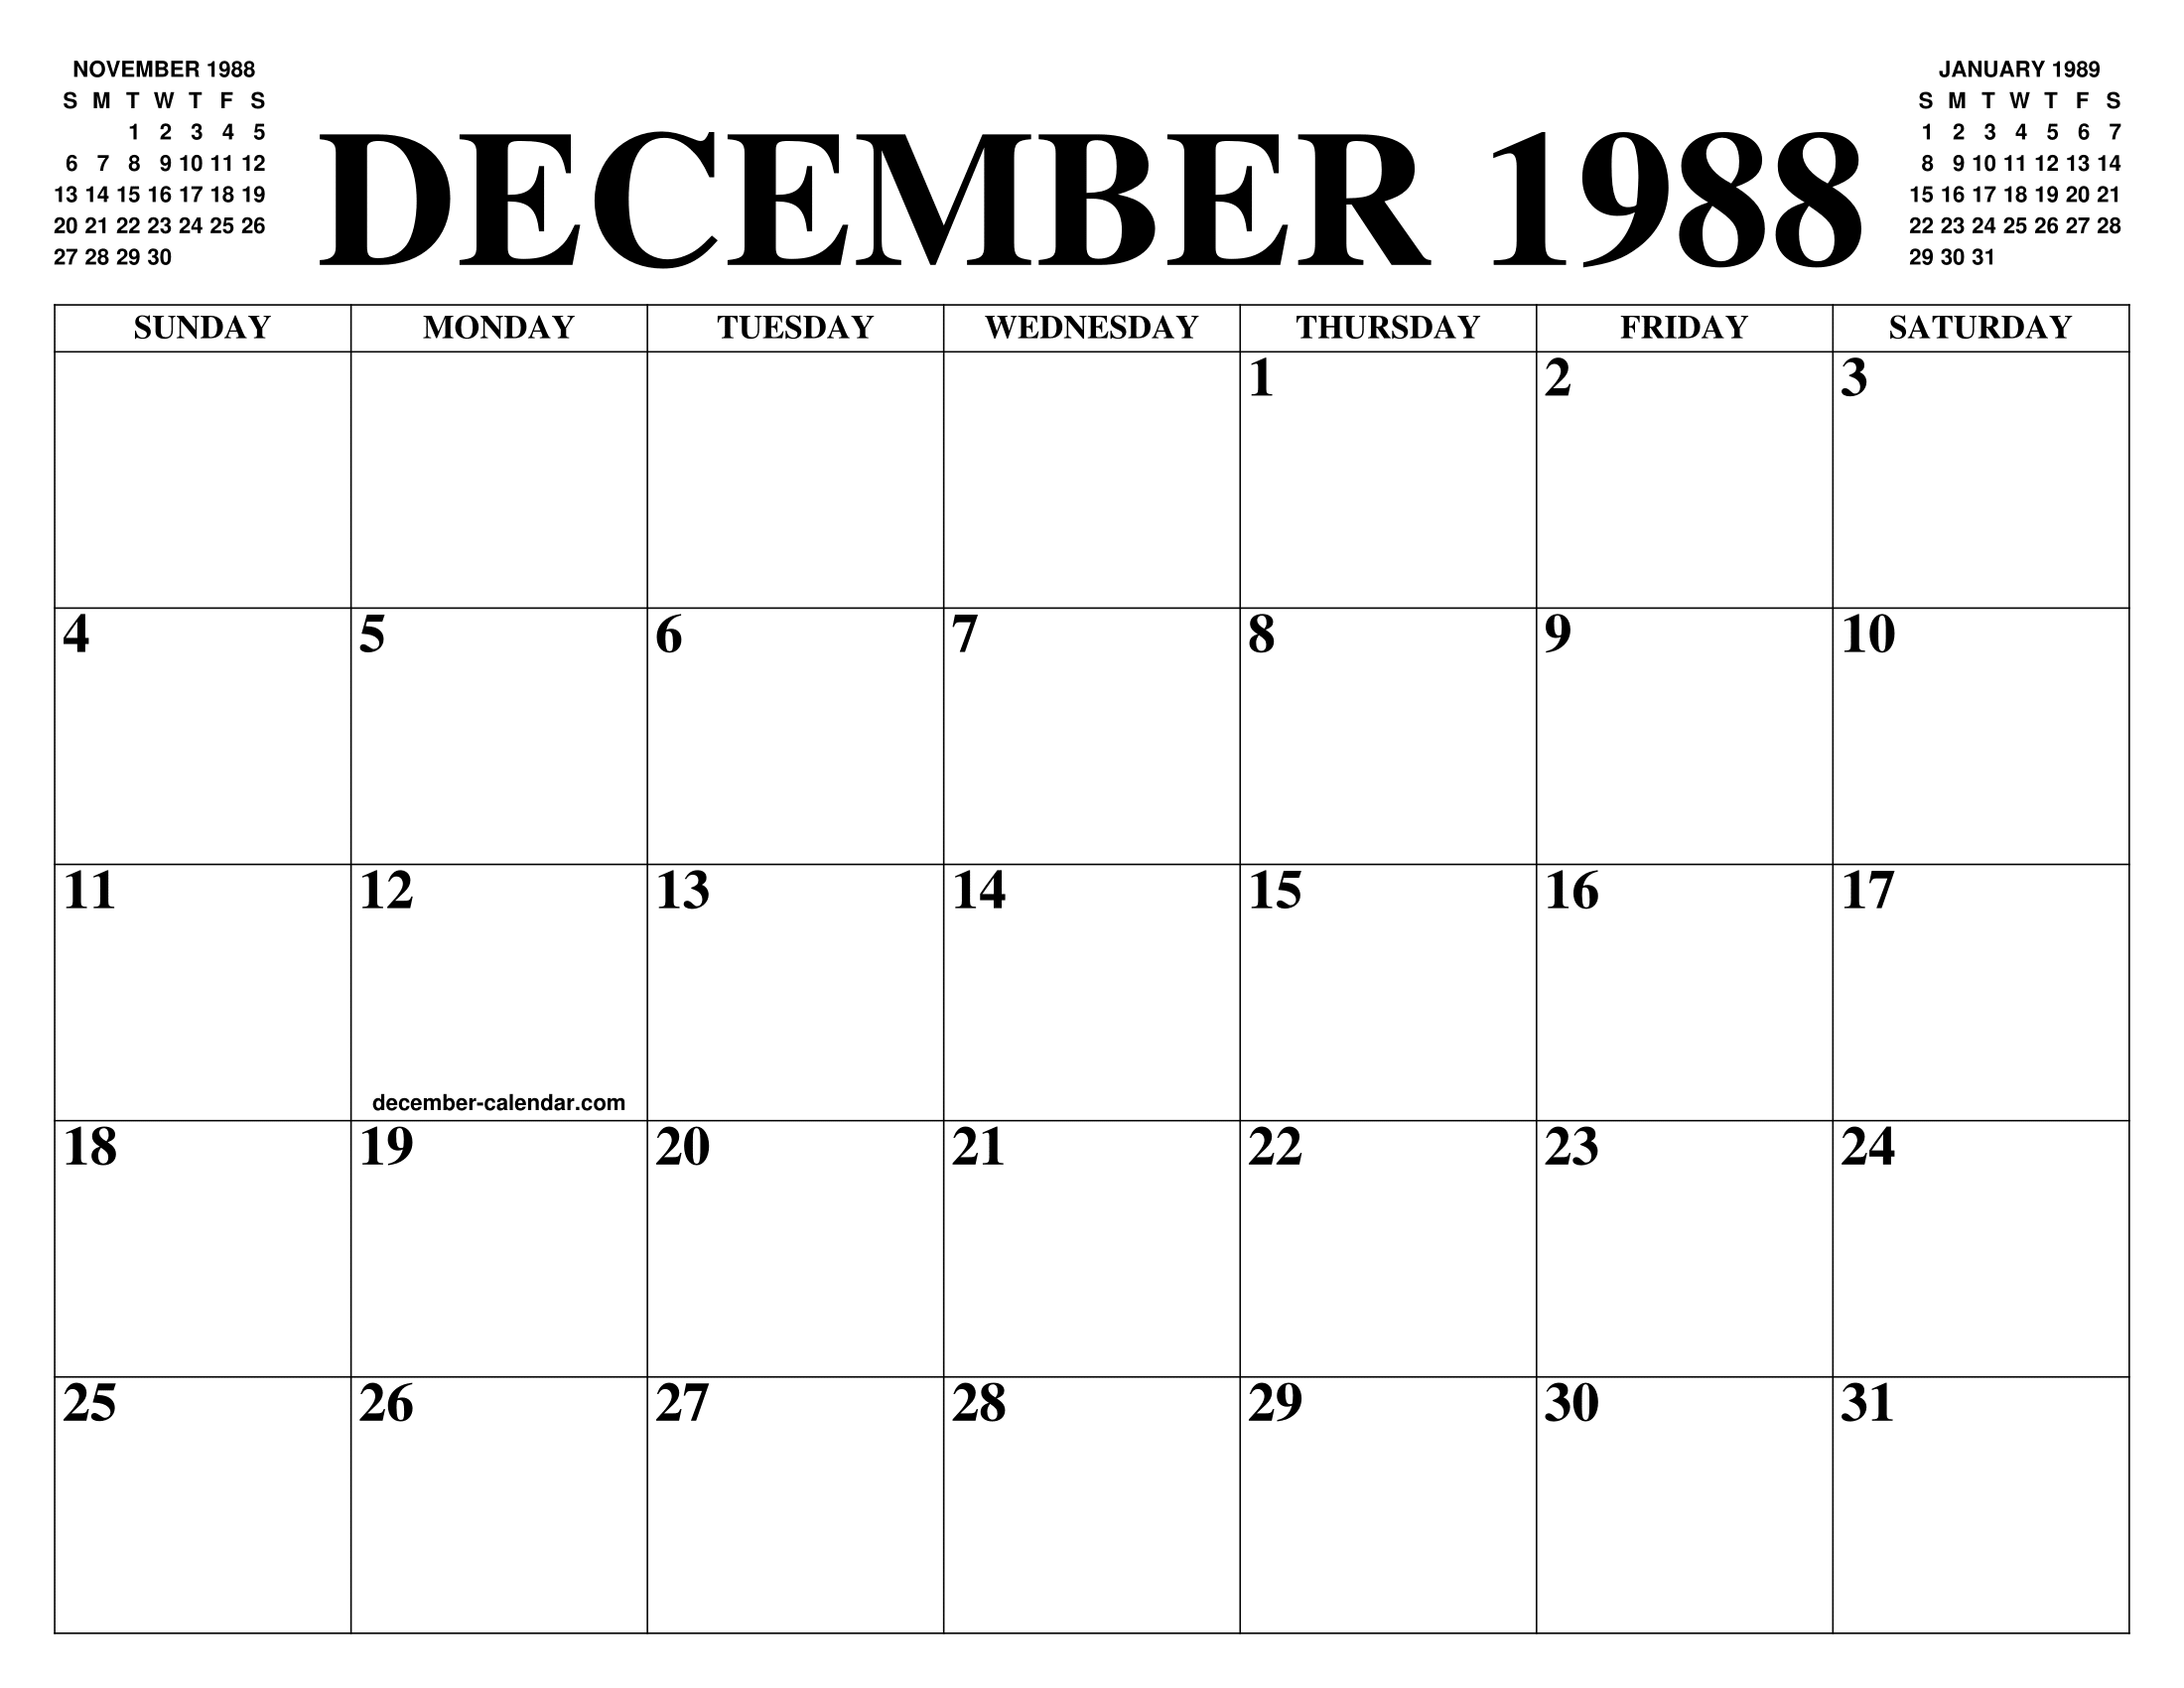 DECEMBER 1988 CALENDAR OF THE MONTH: FREE PRINTABLE DECEMBER CALENDAR